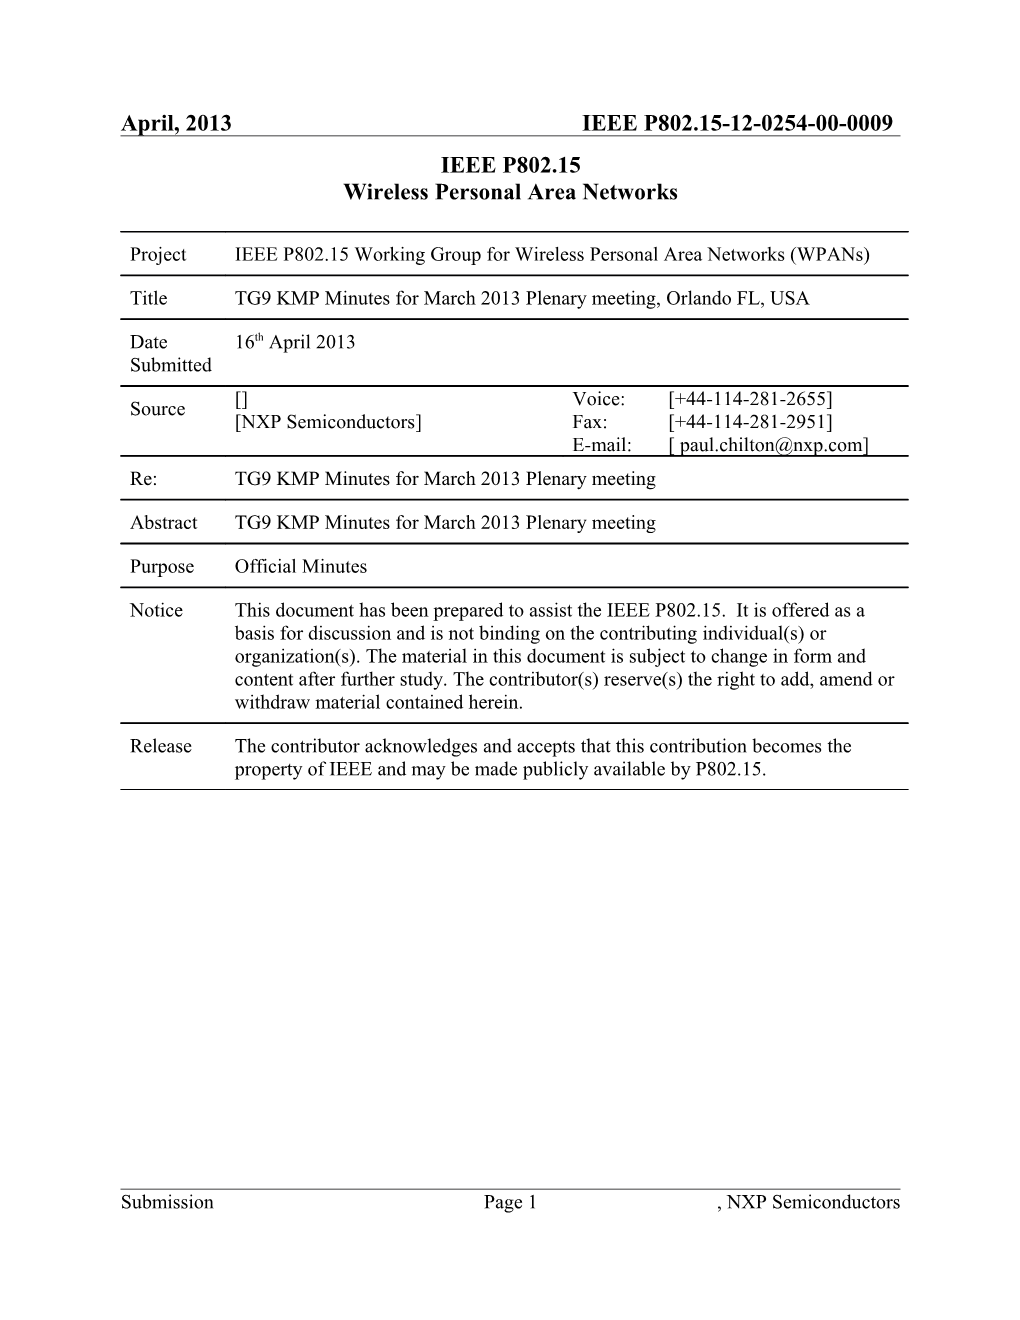 TG9 KMP Minutes for March 2013 Plenary Meeting, Orlando FL, USA